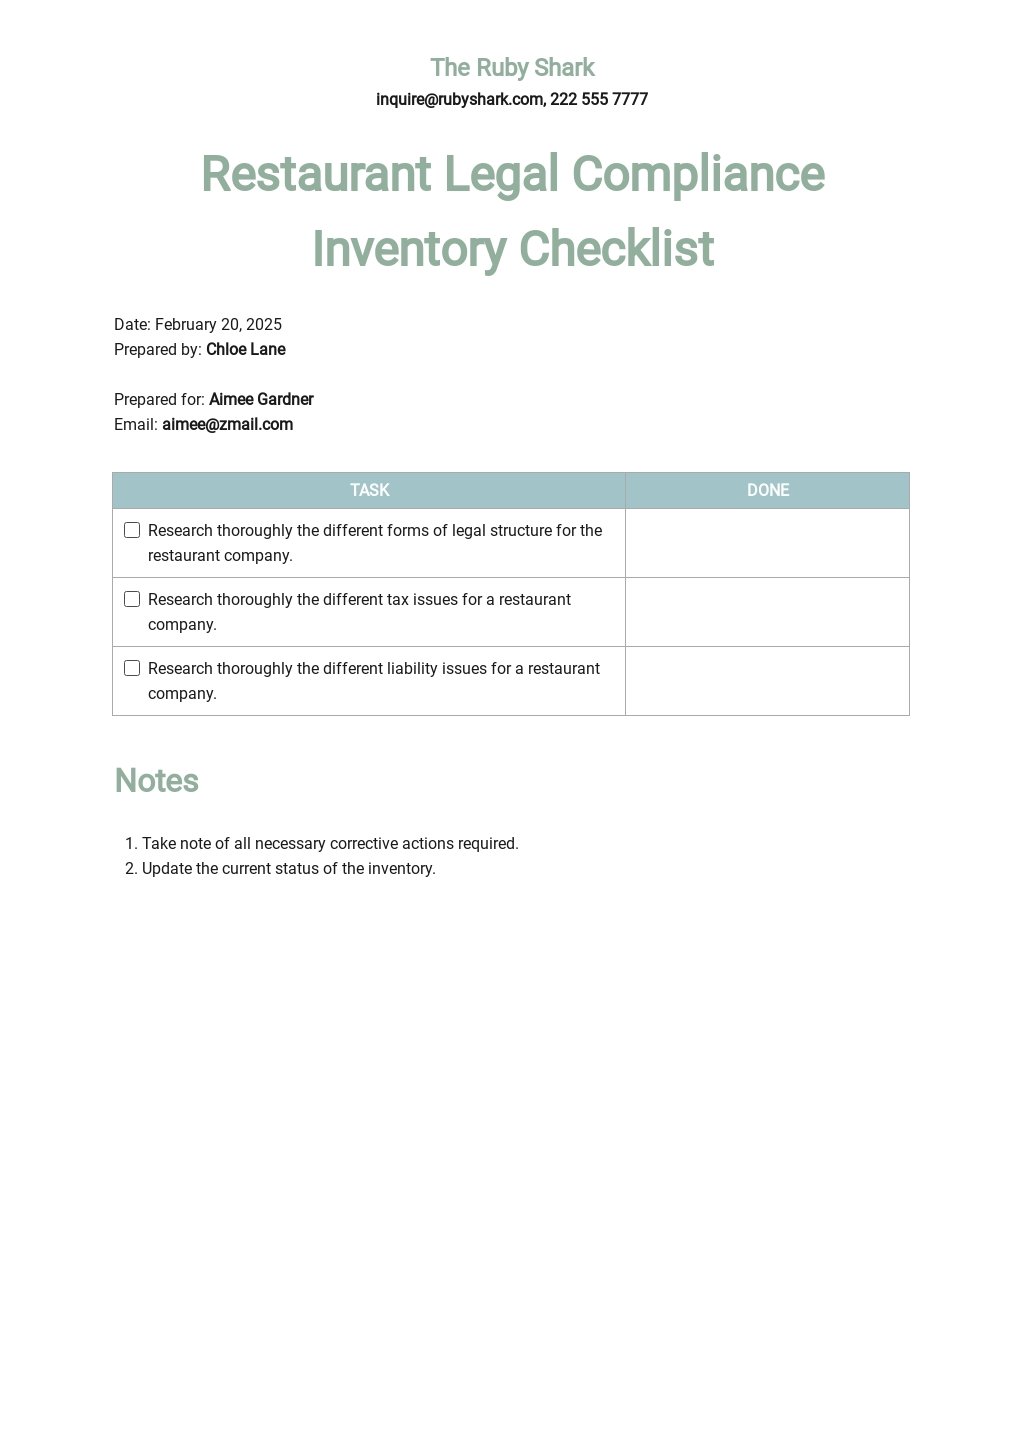 Restaurant Legal Compliance Inventory Checklist Template.jpe